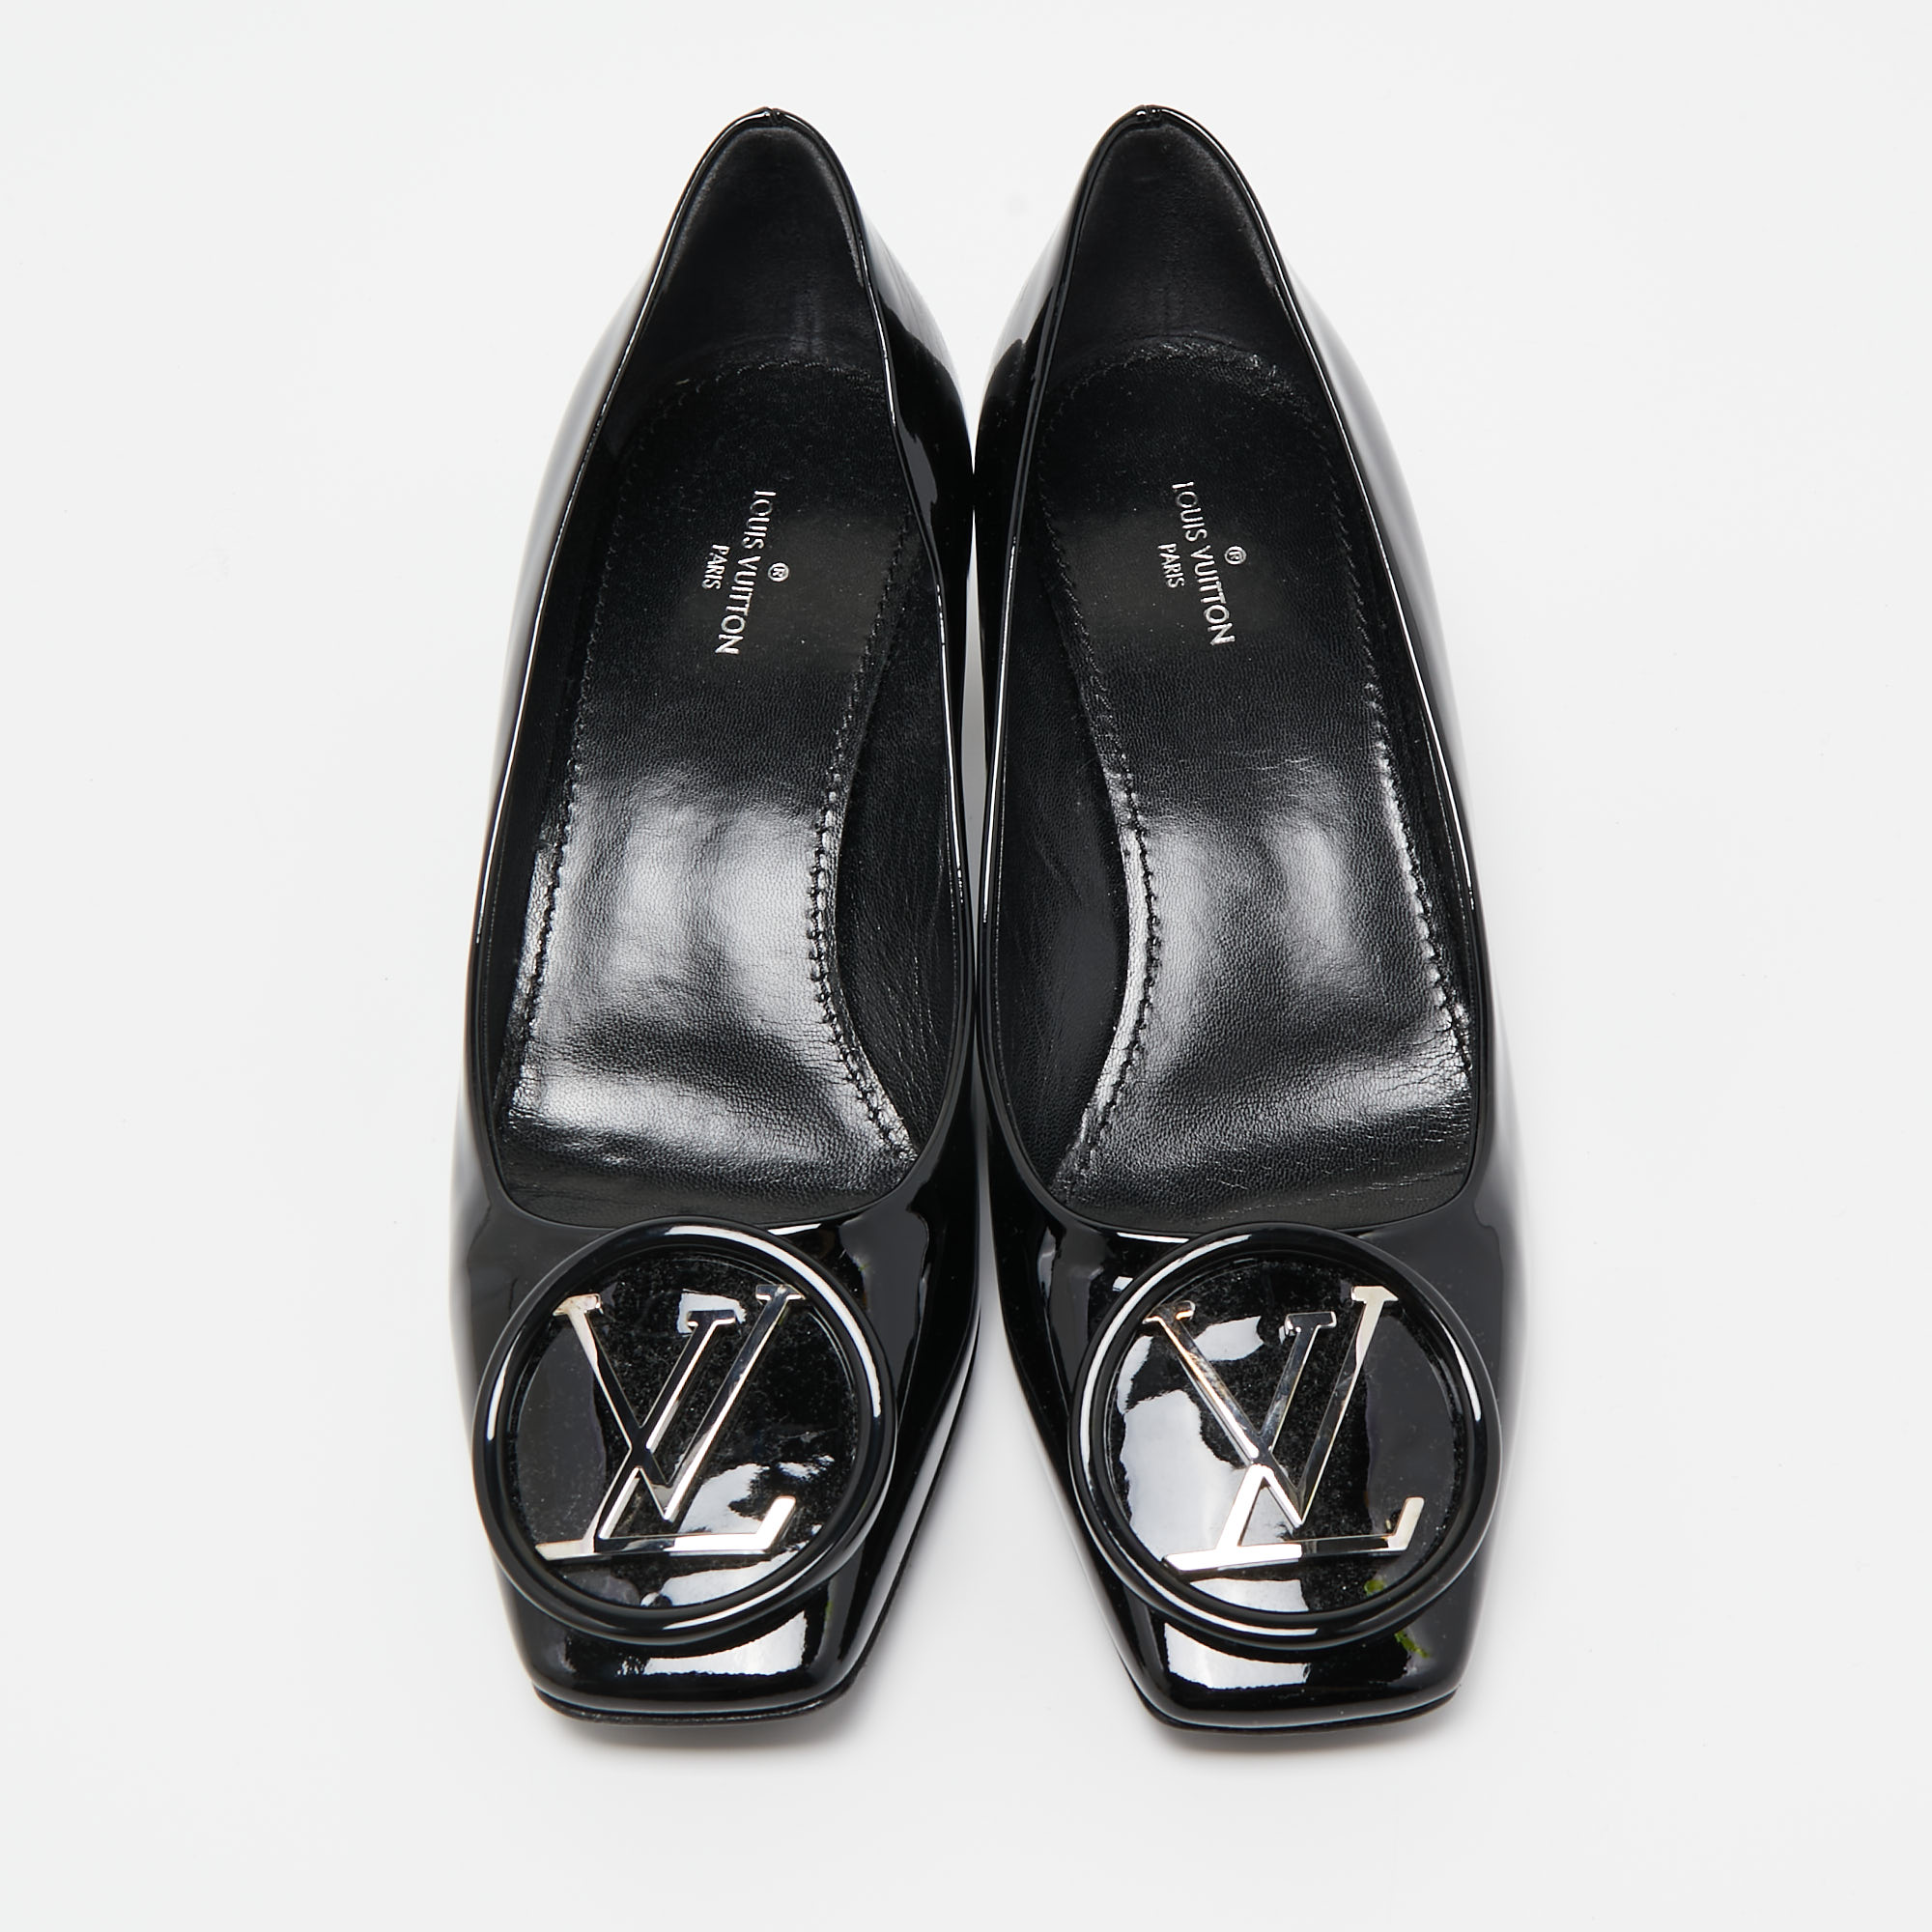 Louis Vuitton Black Patent Leather Madeleine Pumps Size 36